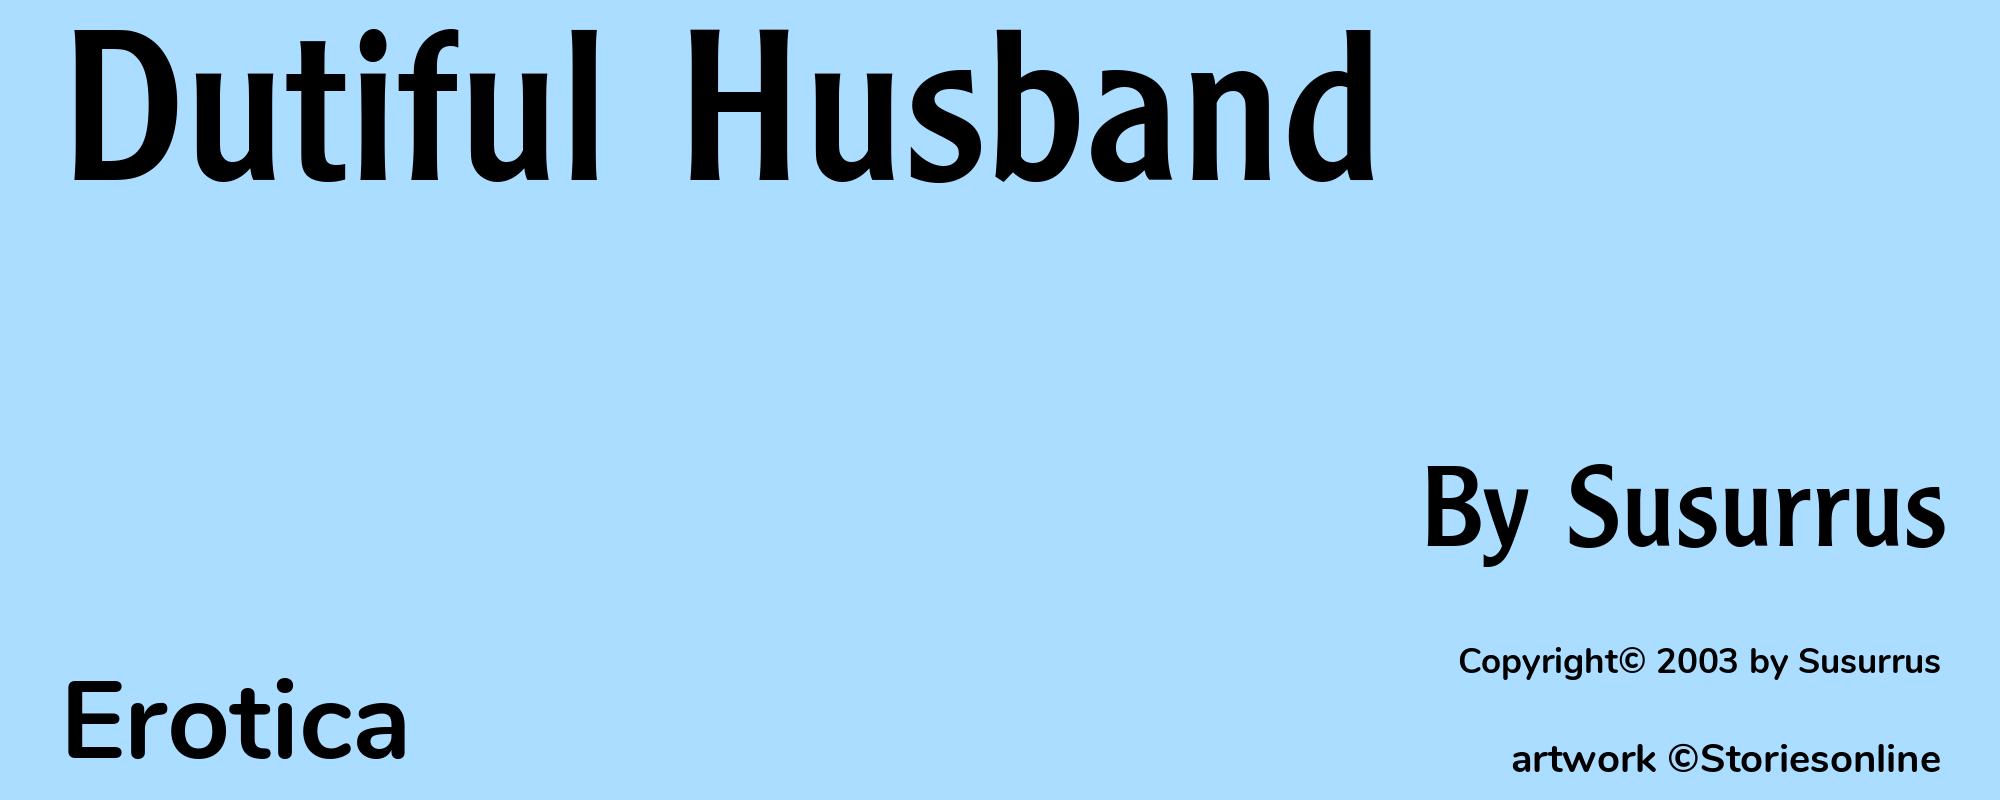 Dutiful Husband - Cover